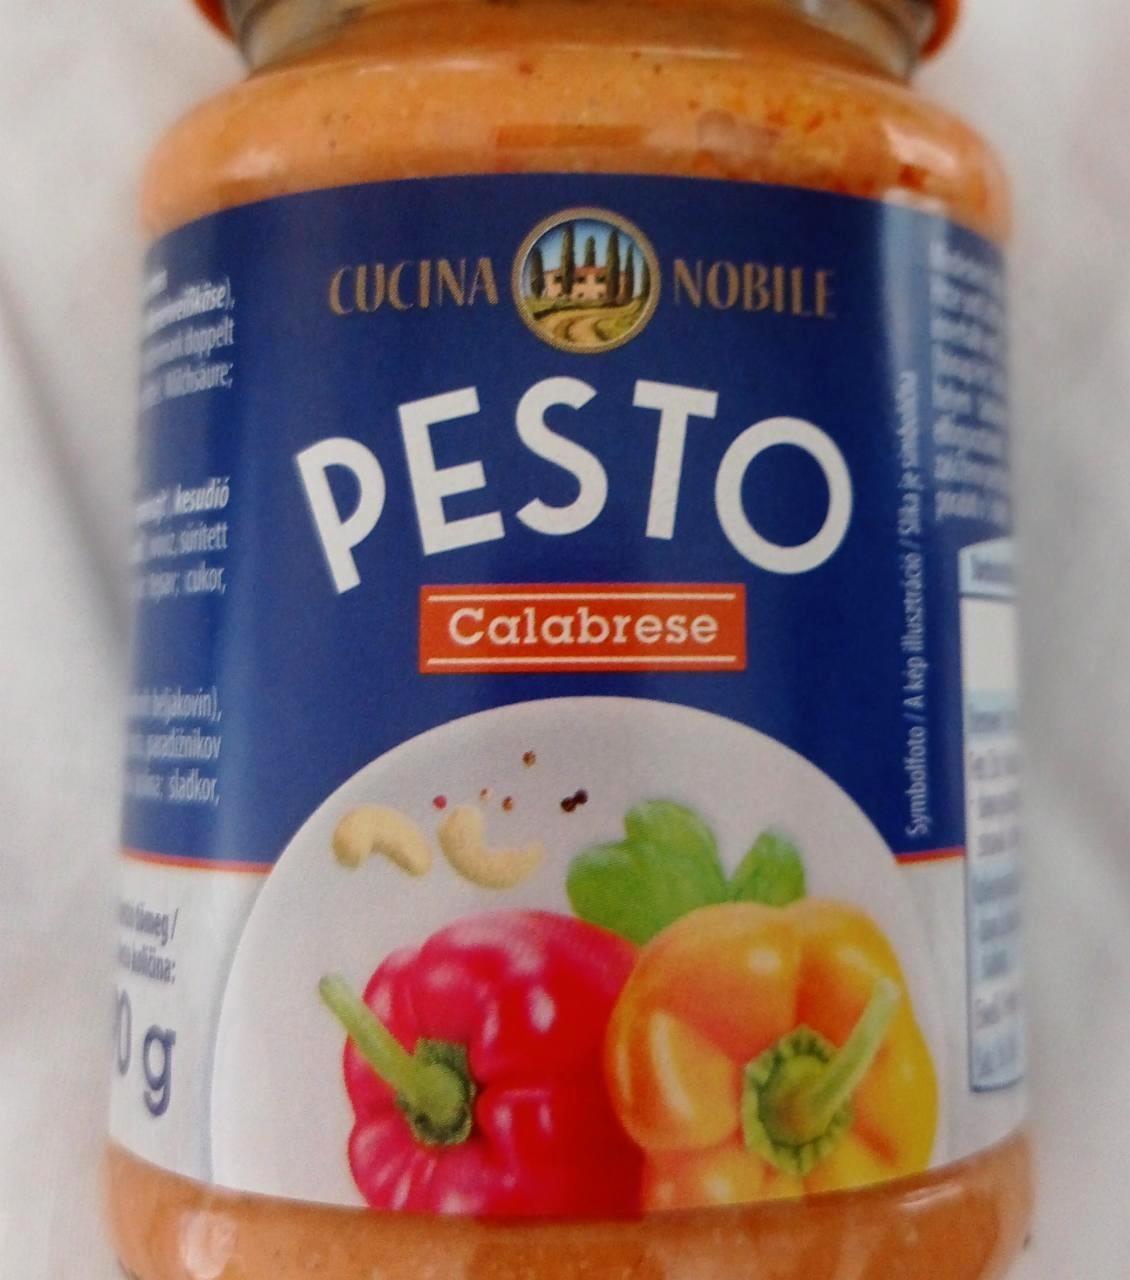 Képek - Pesto Calabrese szósz Cucina Nobile